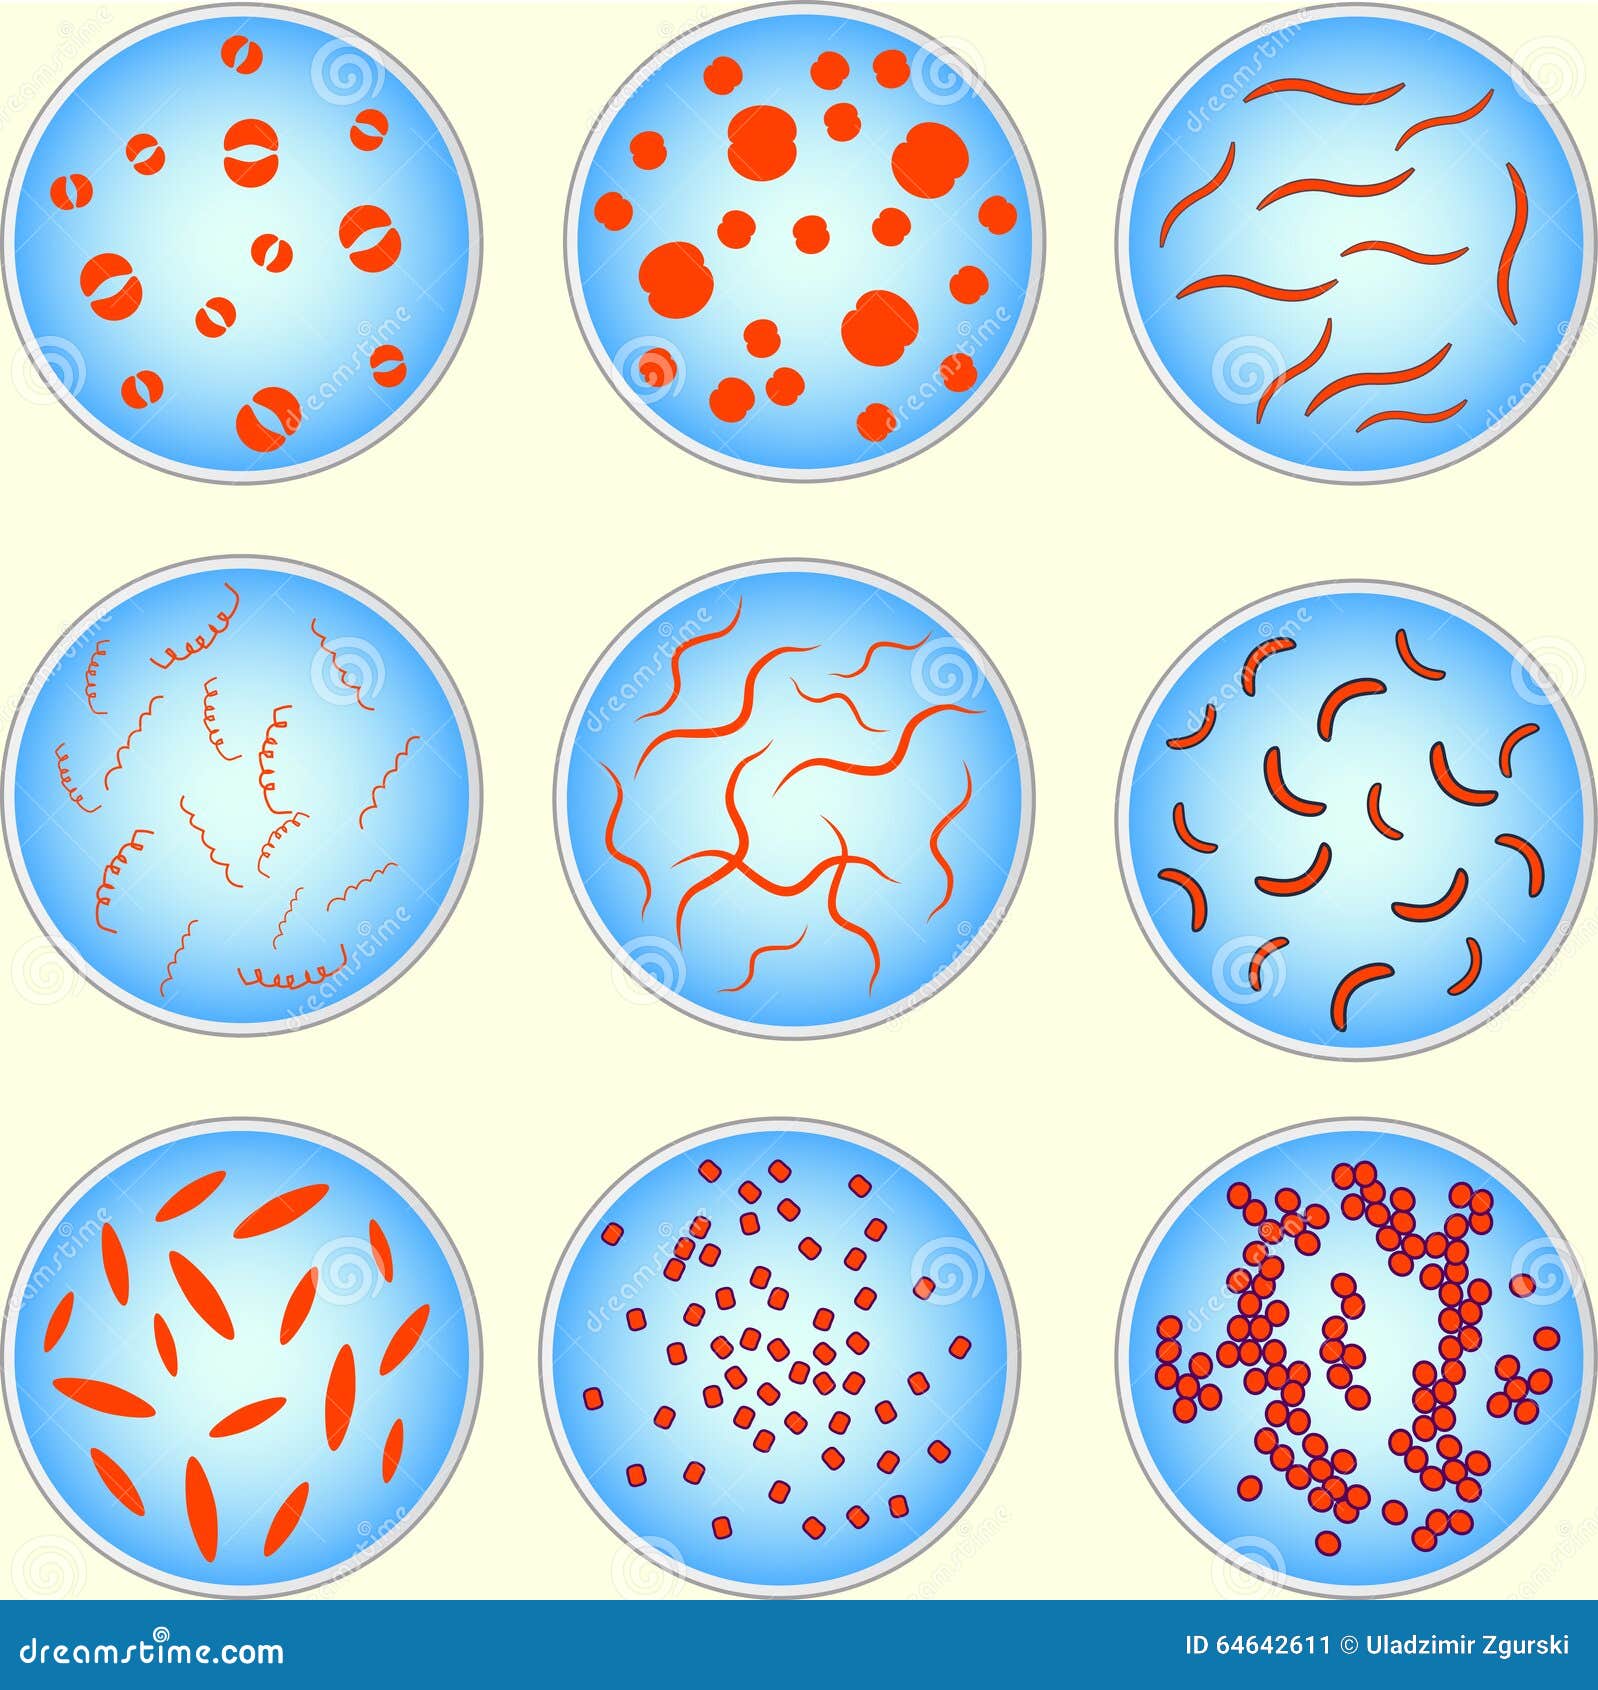 Бактерии округлой формы